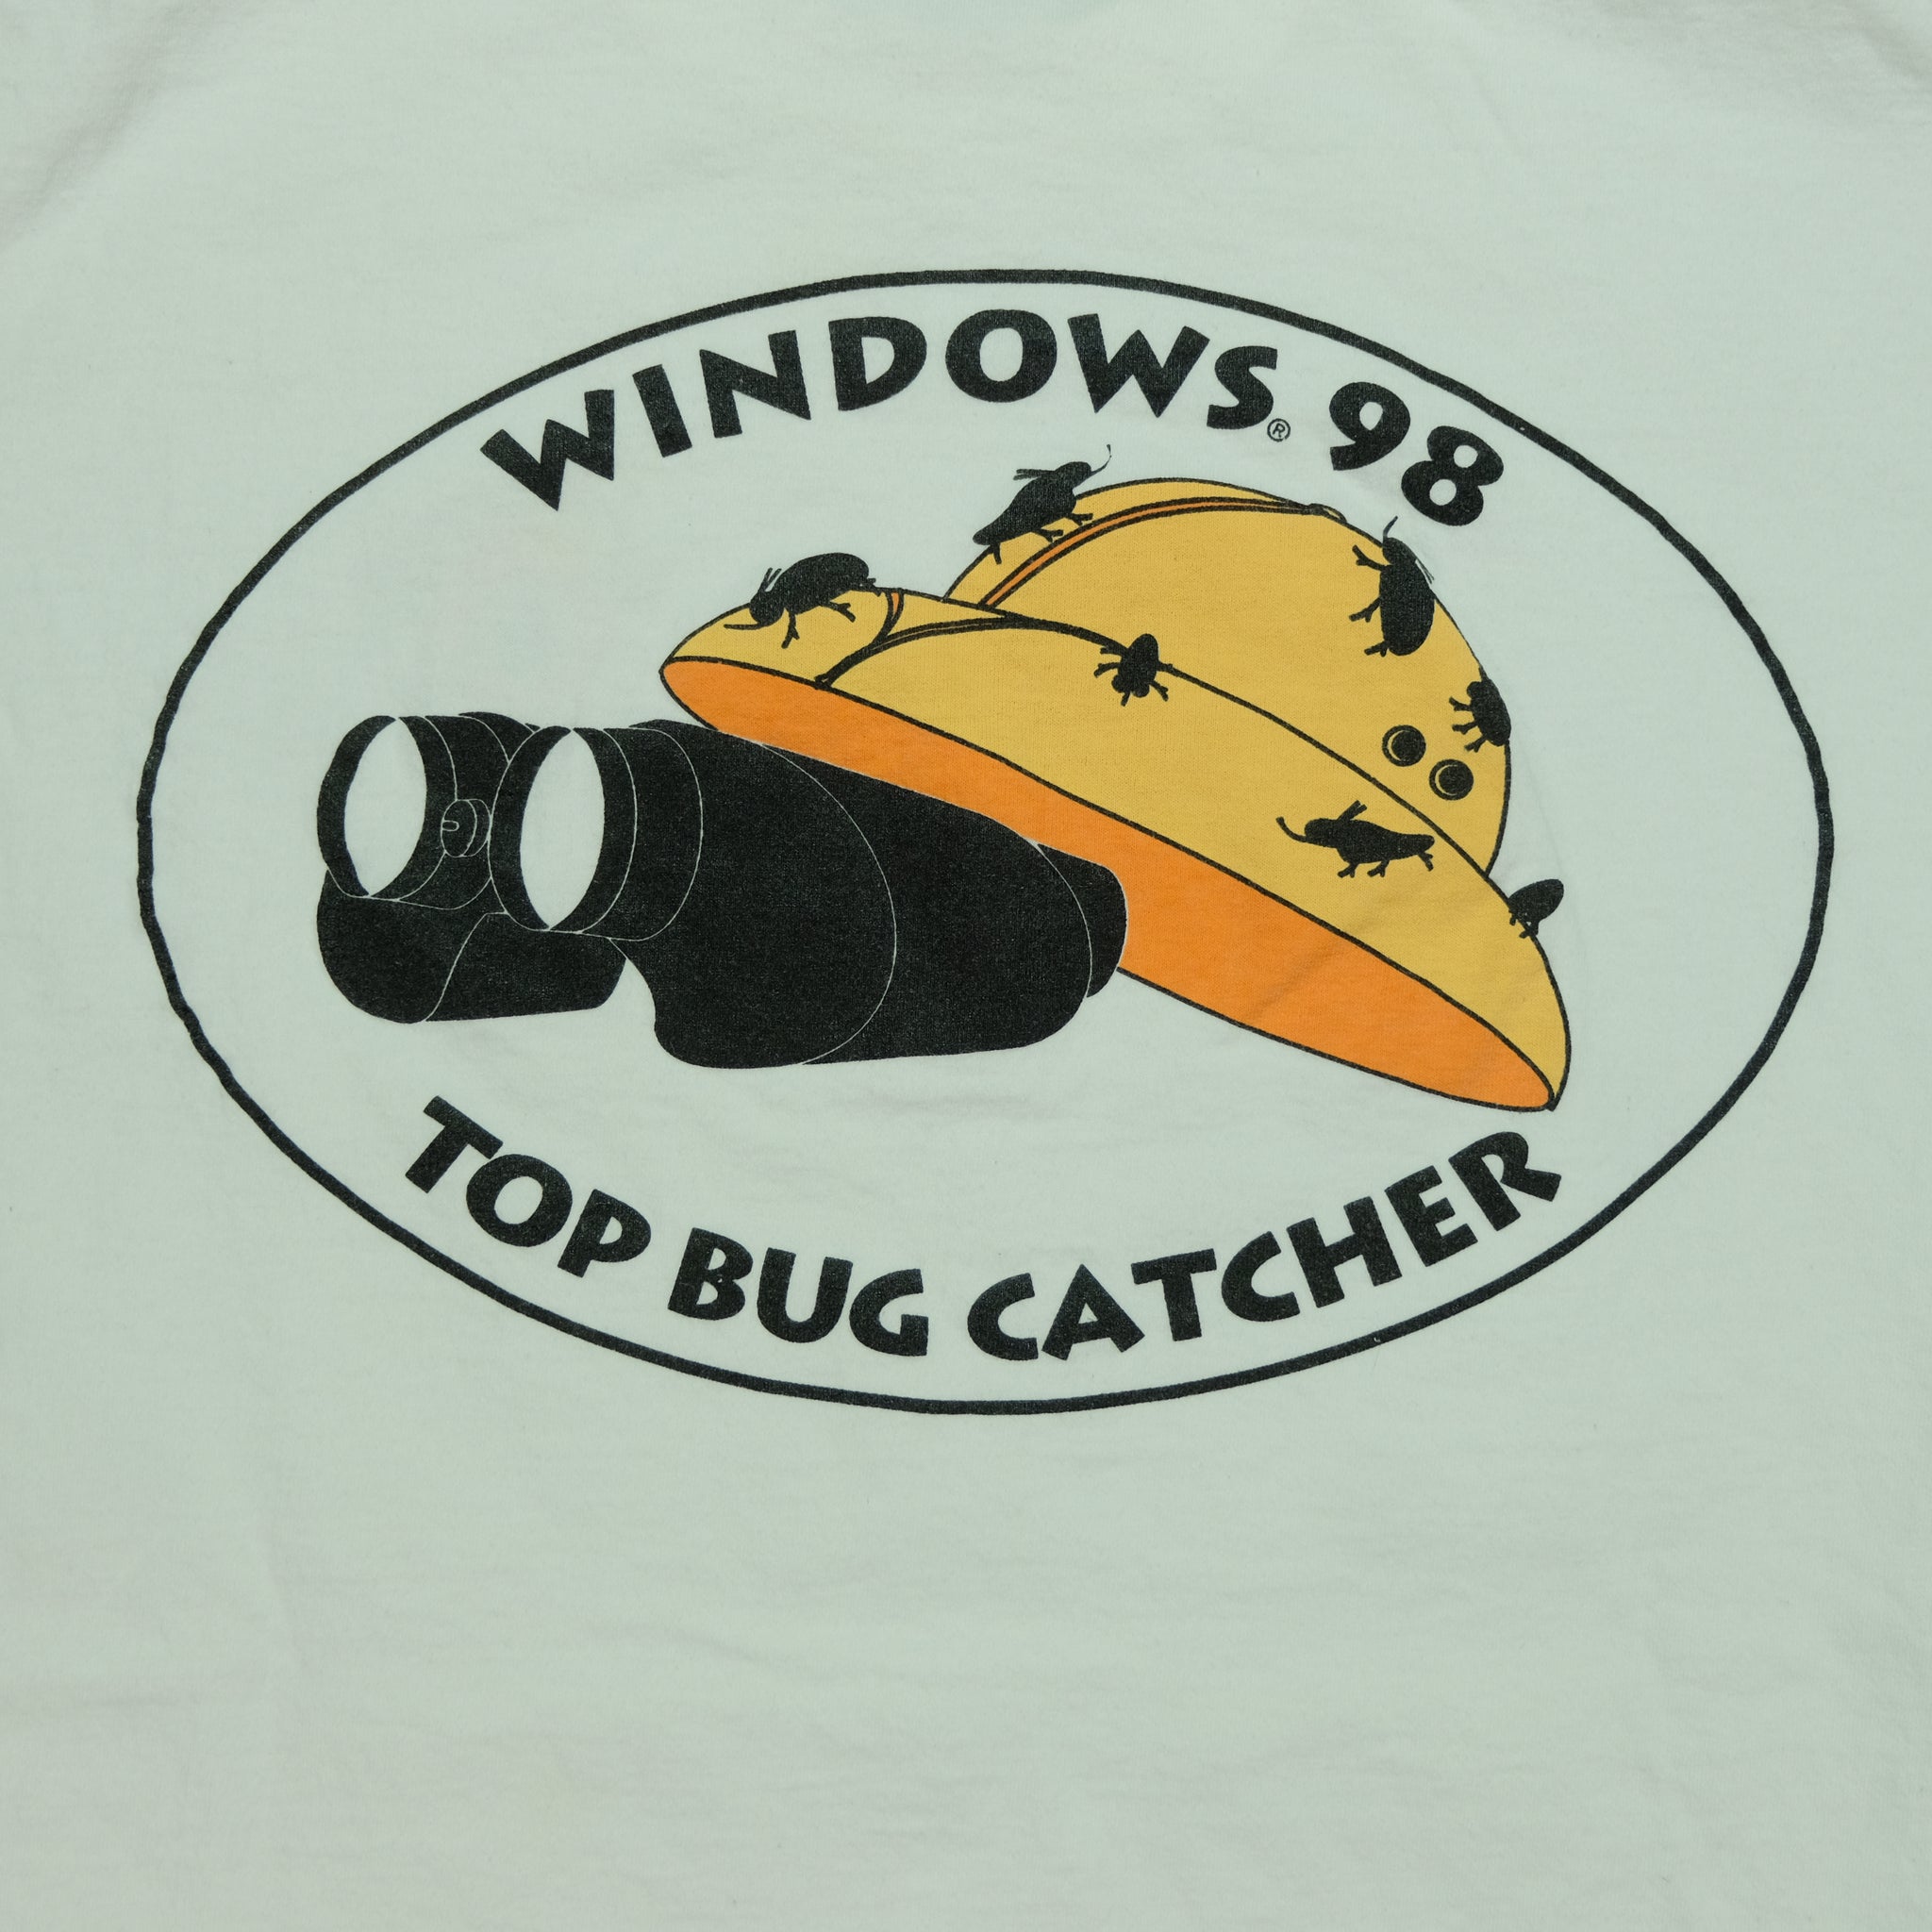 Vintage Windows 98 Top Bug Catcher Double Sided Tee on Oneita